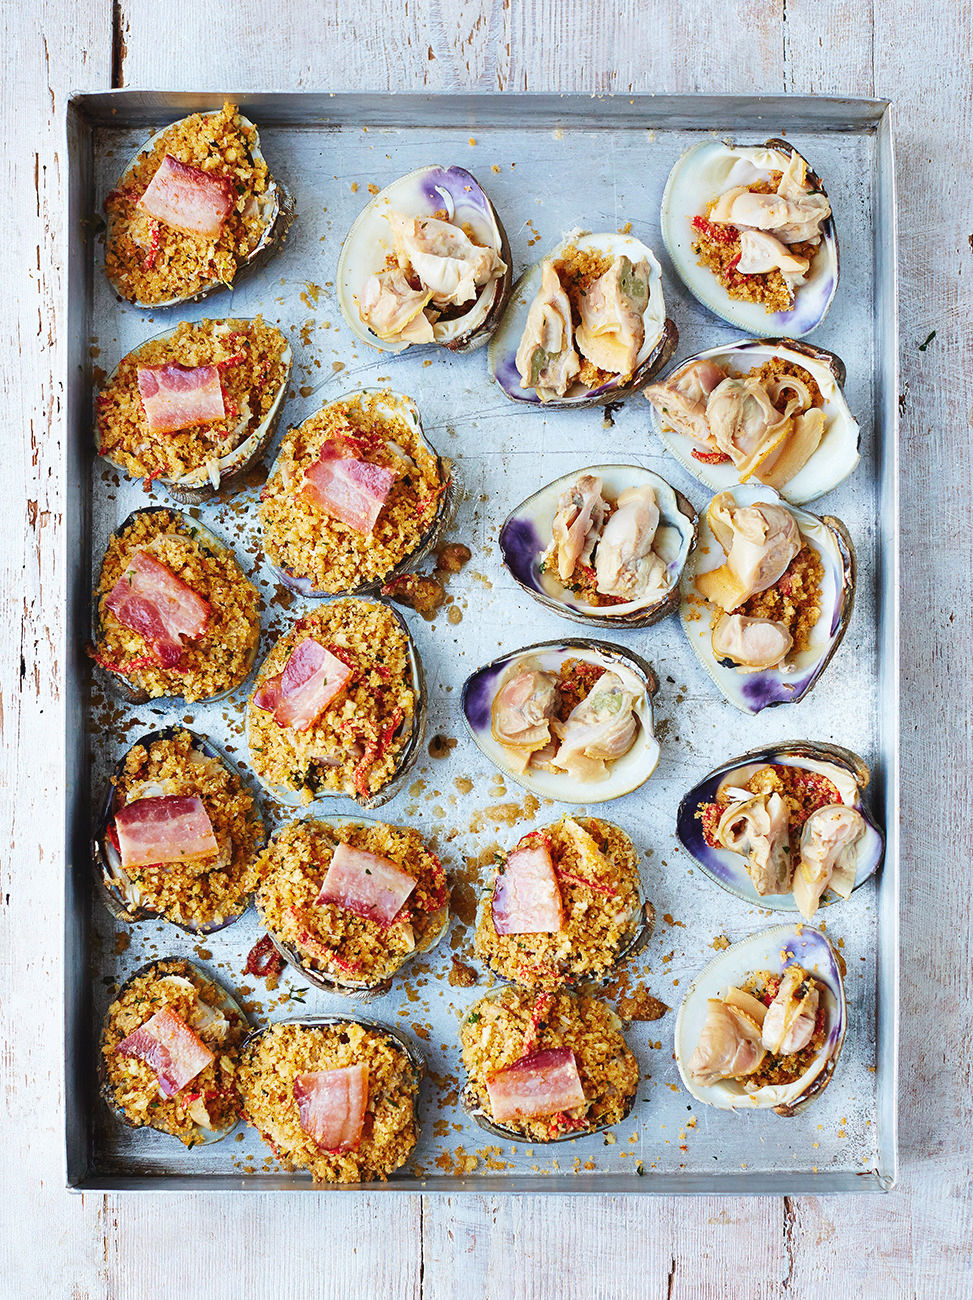 david venable clams casino recipe